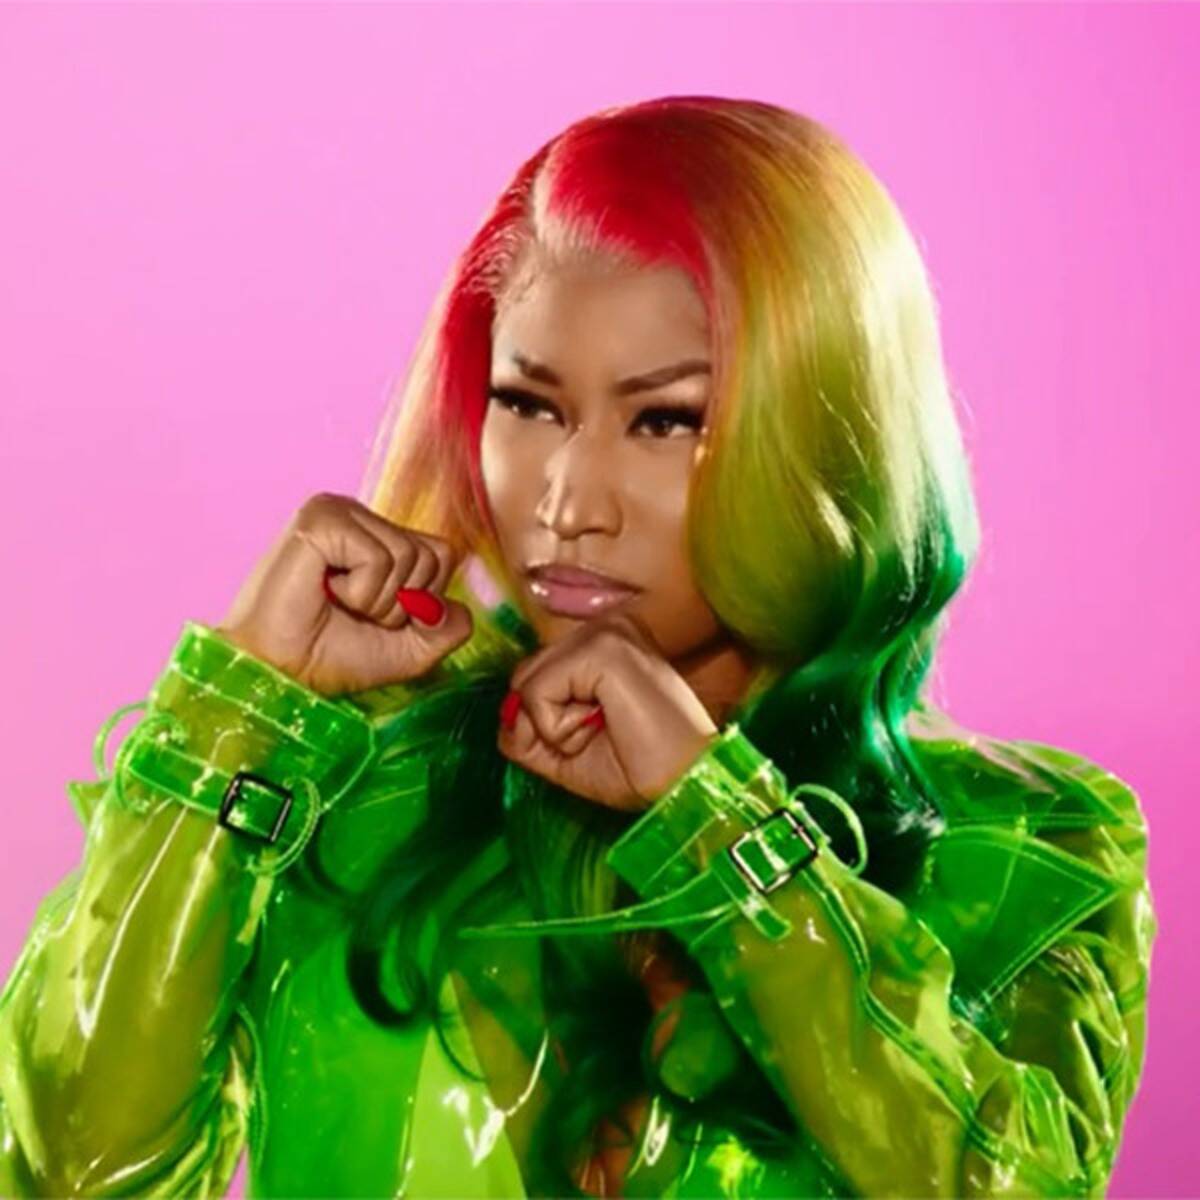 MP3: Nicki Minaj - Barbie Dreams 